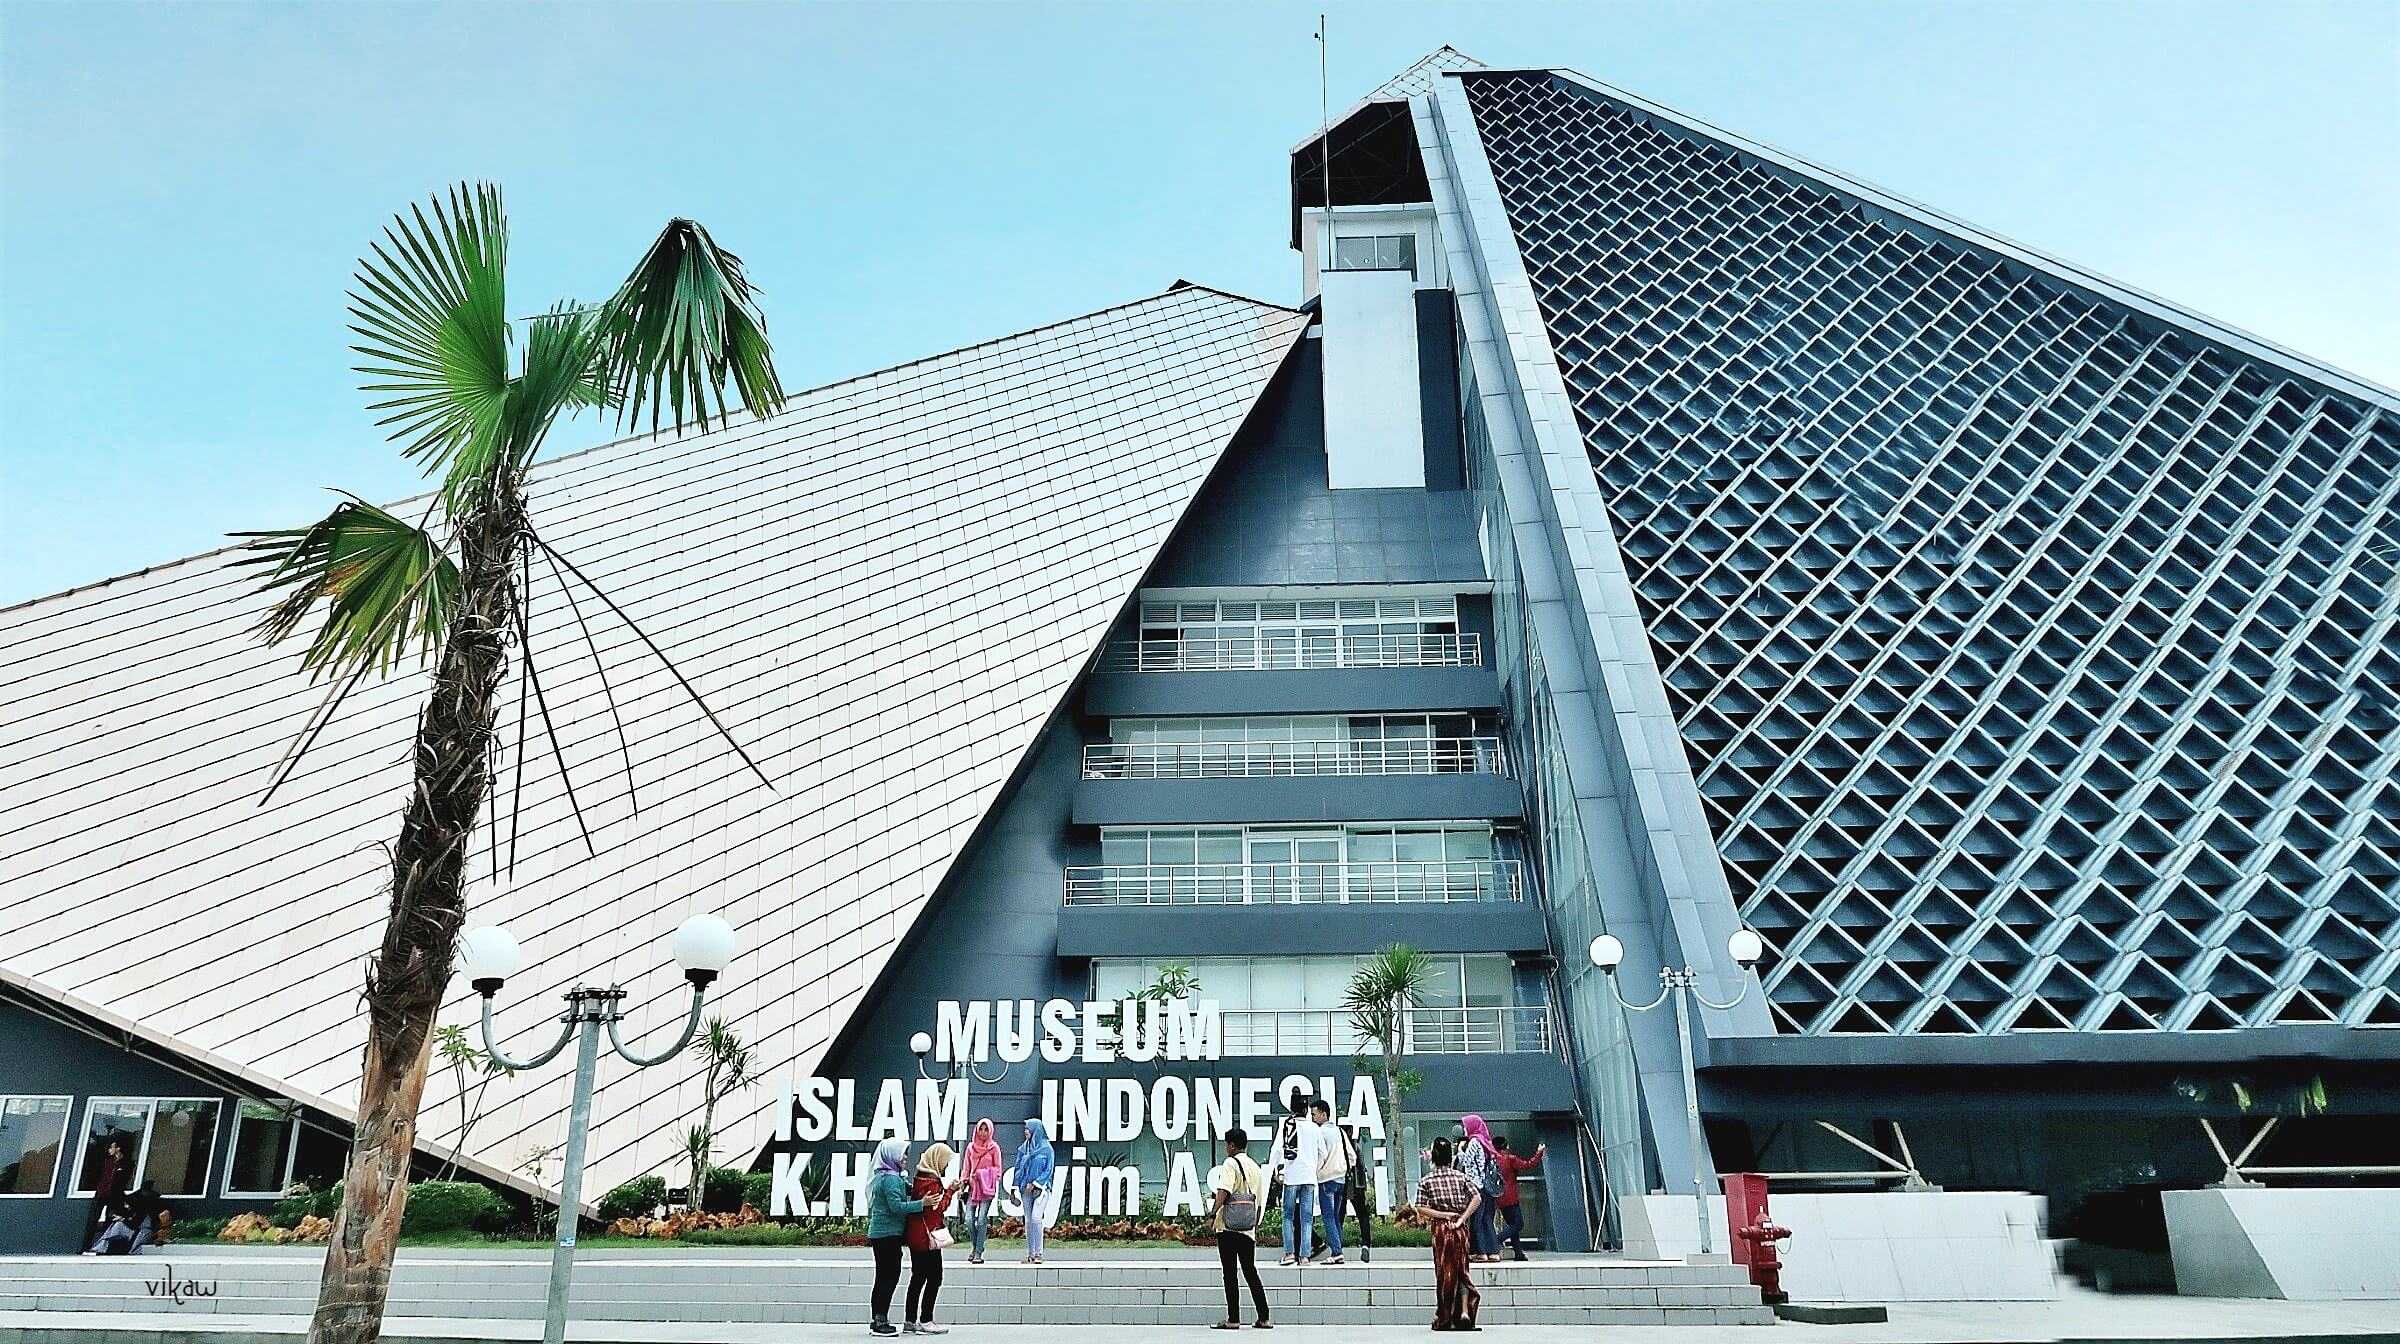 Wisata Museum Islam Indonesia, Menambah Wawasan Perkembangan Islam di Indonesia